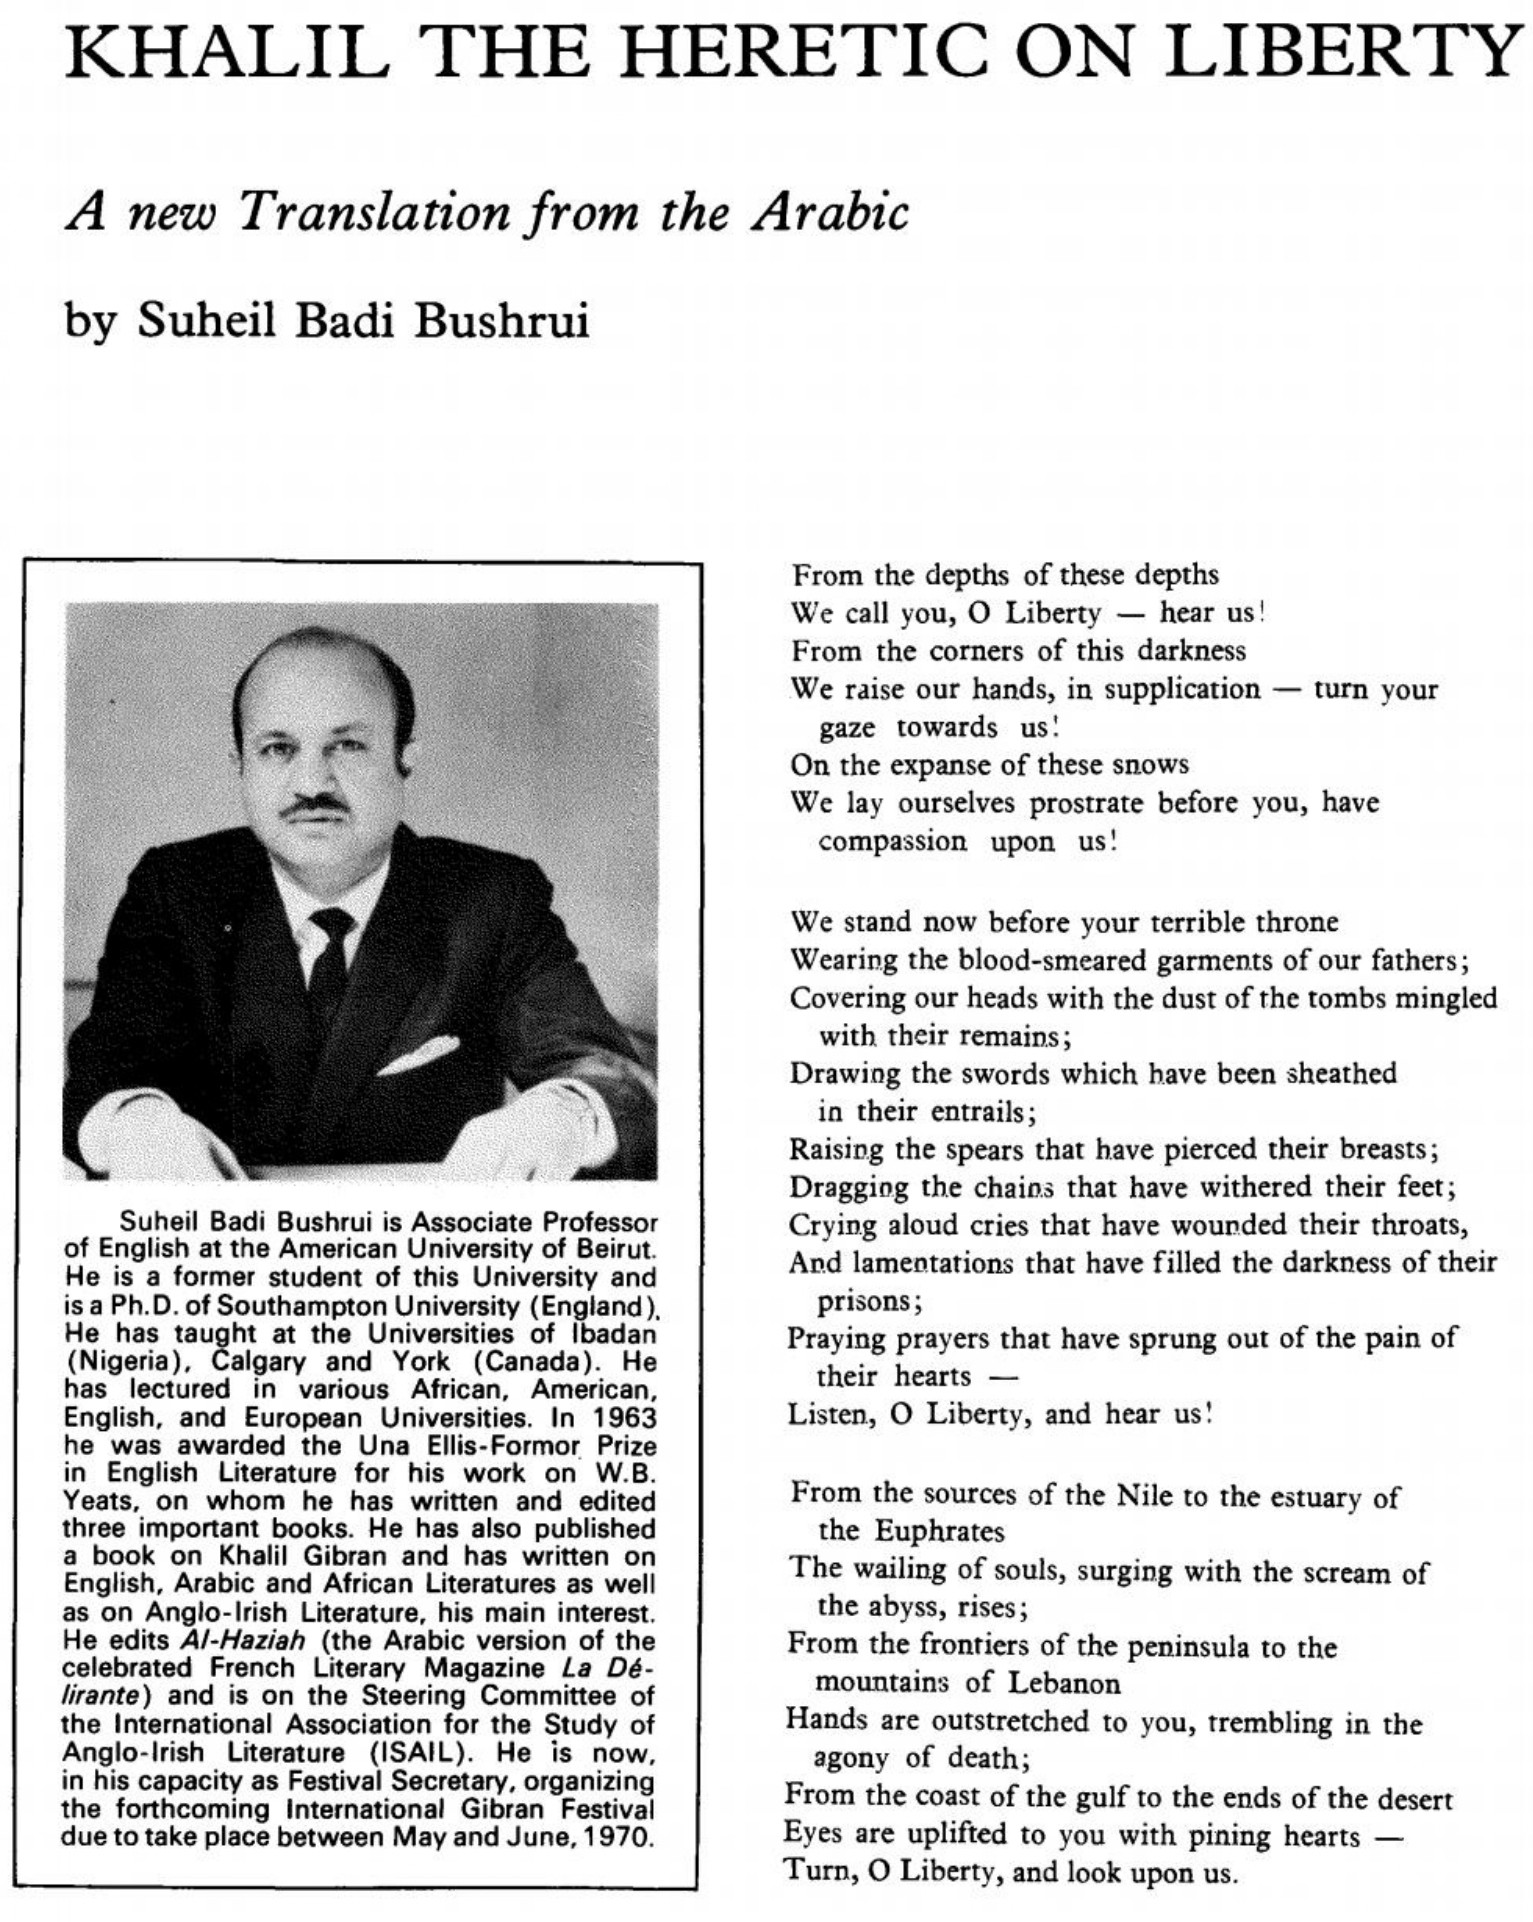 Suheil Badi Bushrui, “Kahlil the Heretic on Liberty: A new Translation from the Arabic”. al-Kulliyah, Summer 1969, pp. 12-14.